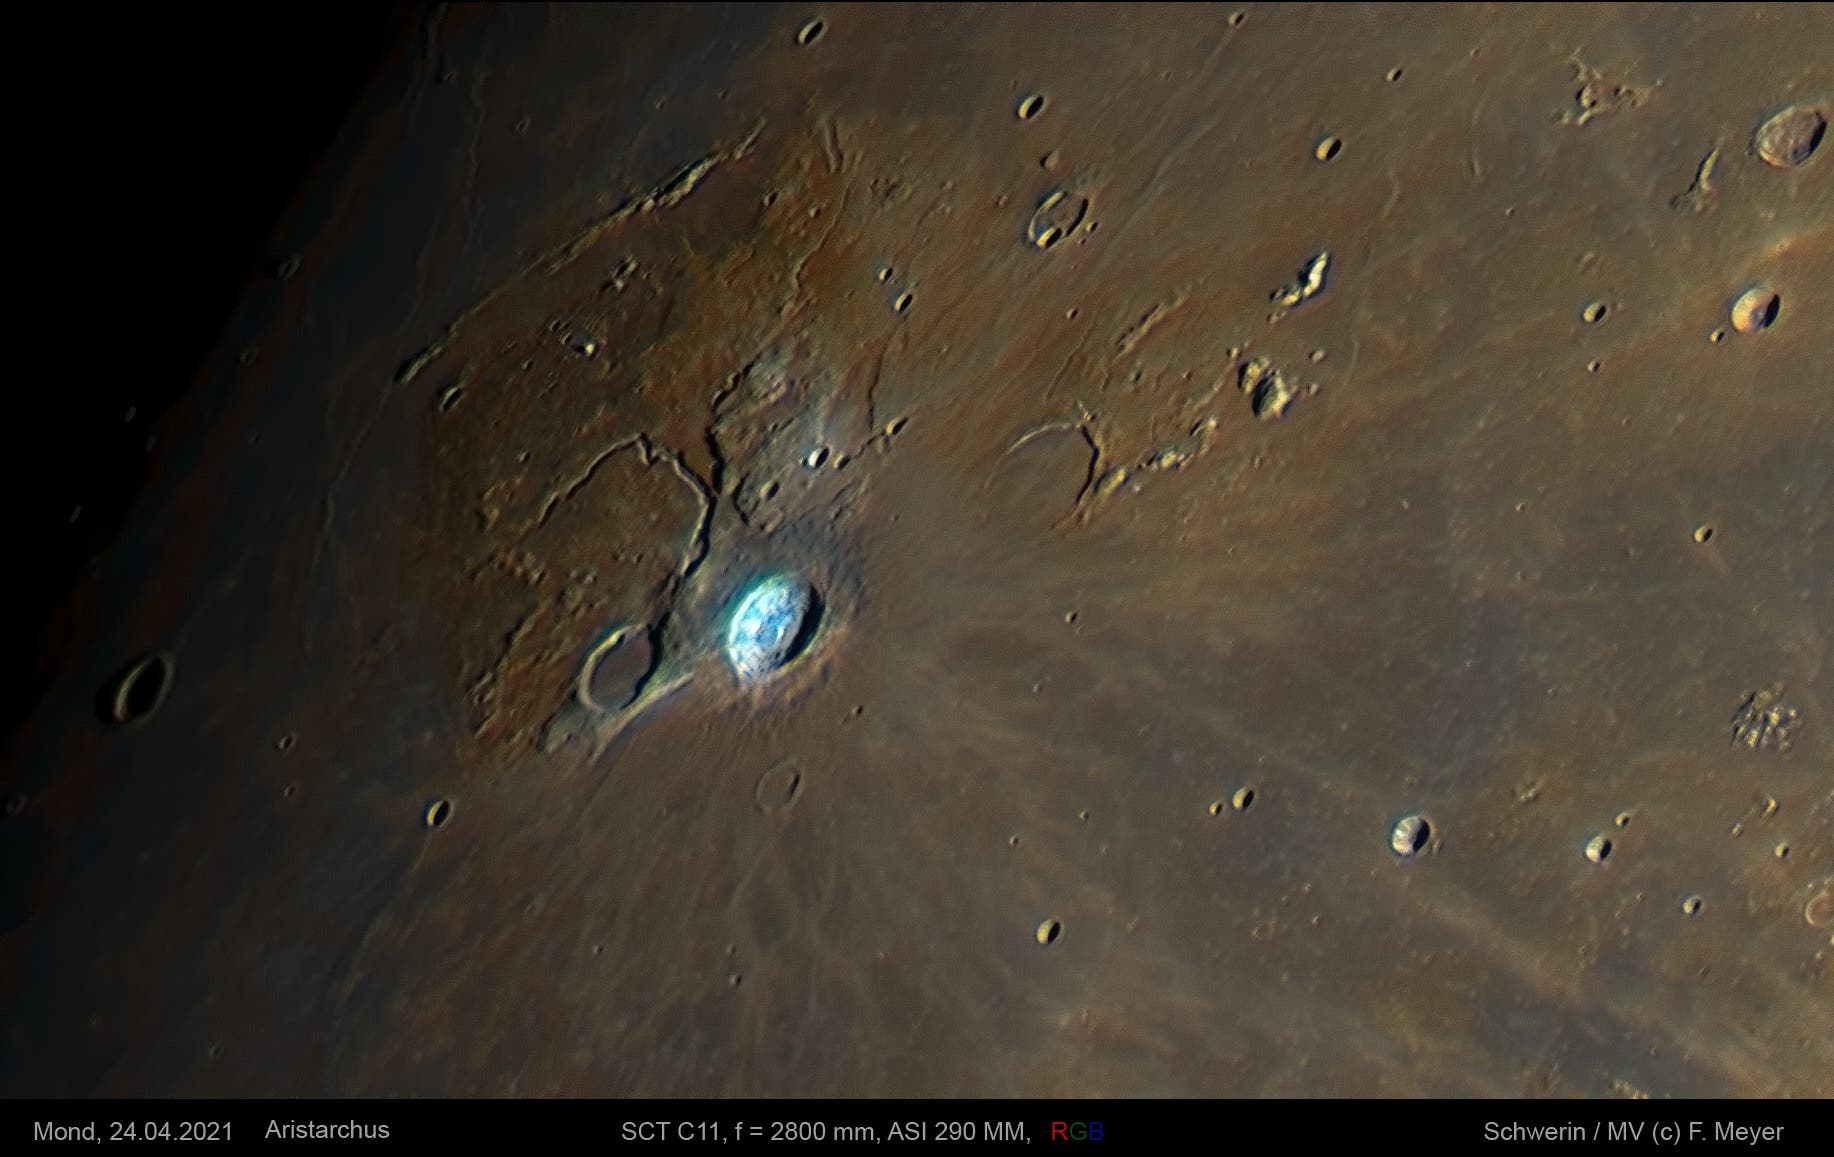 Farbiger Mond - Aristarchus am 24. April 2021